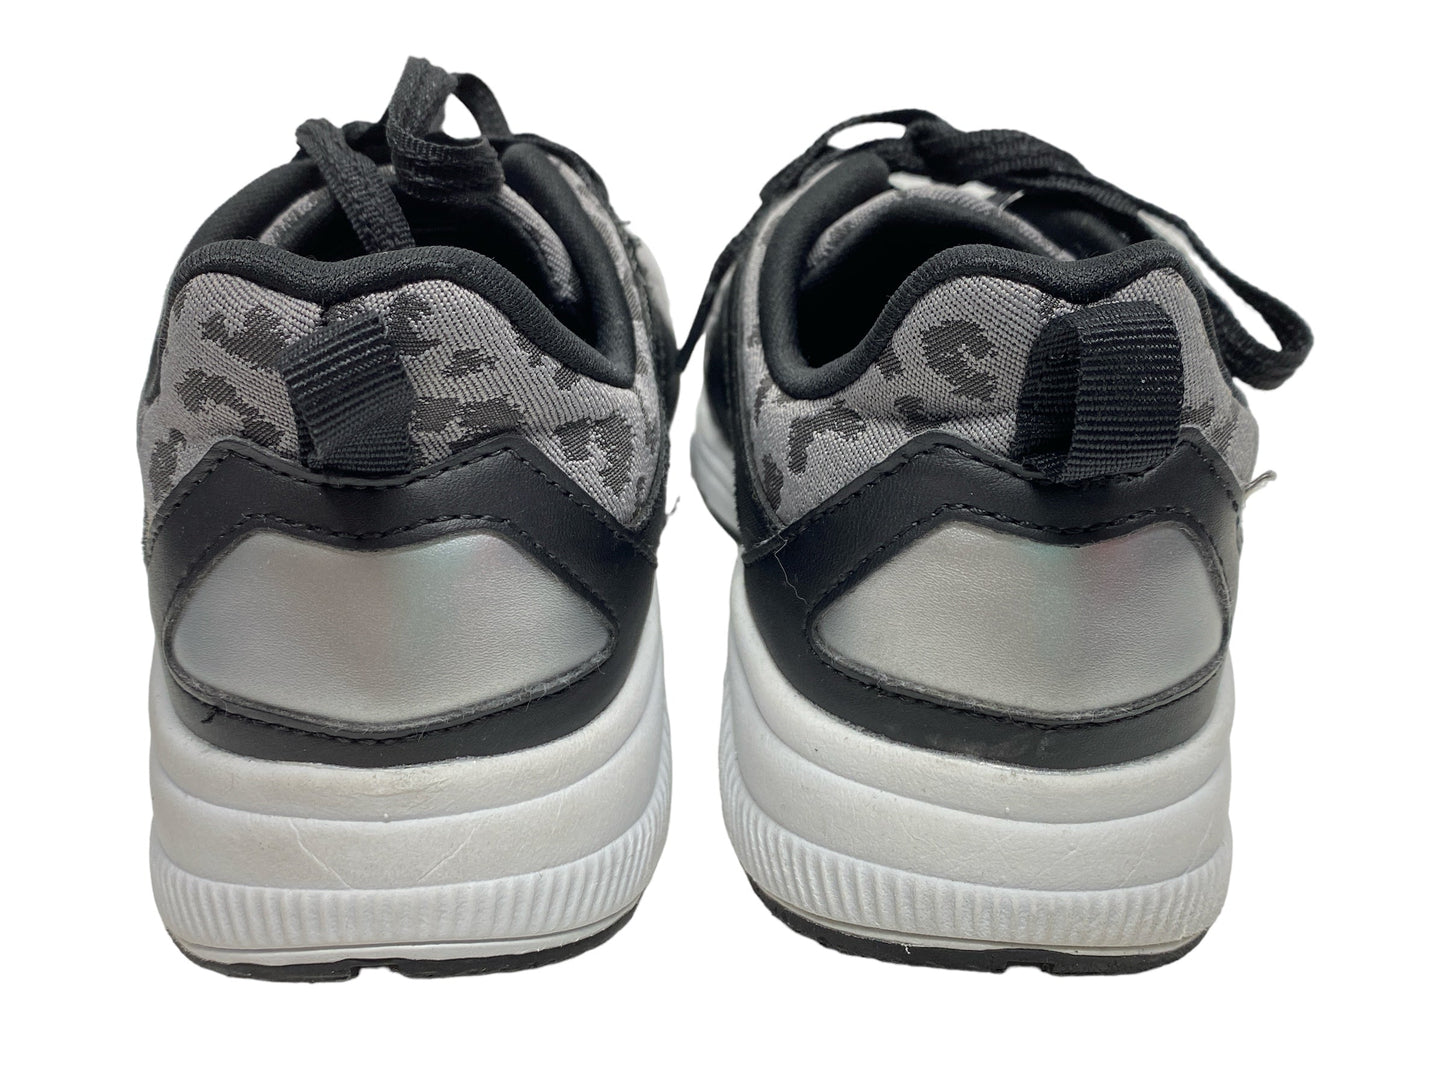 Grey Shoes Athletic Avia, Size 8